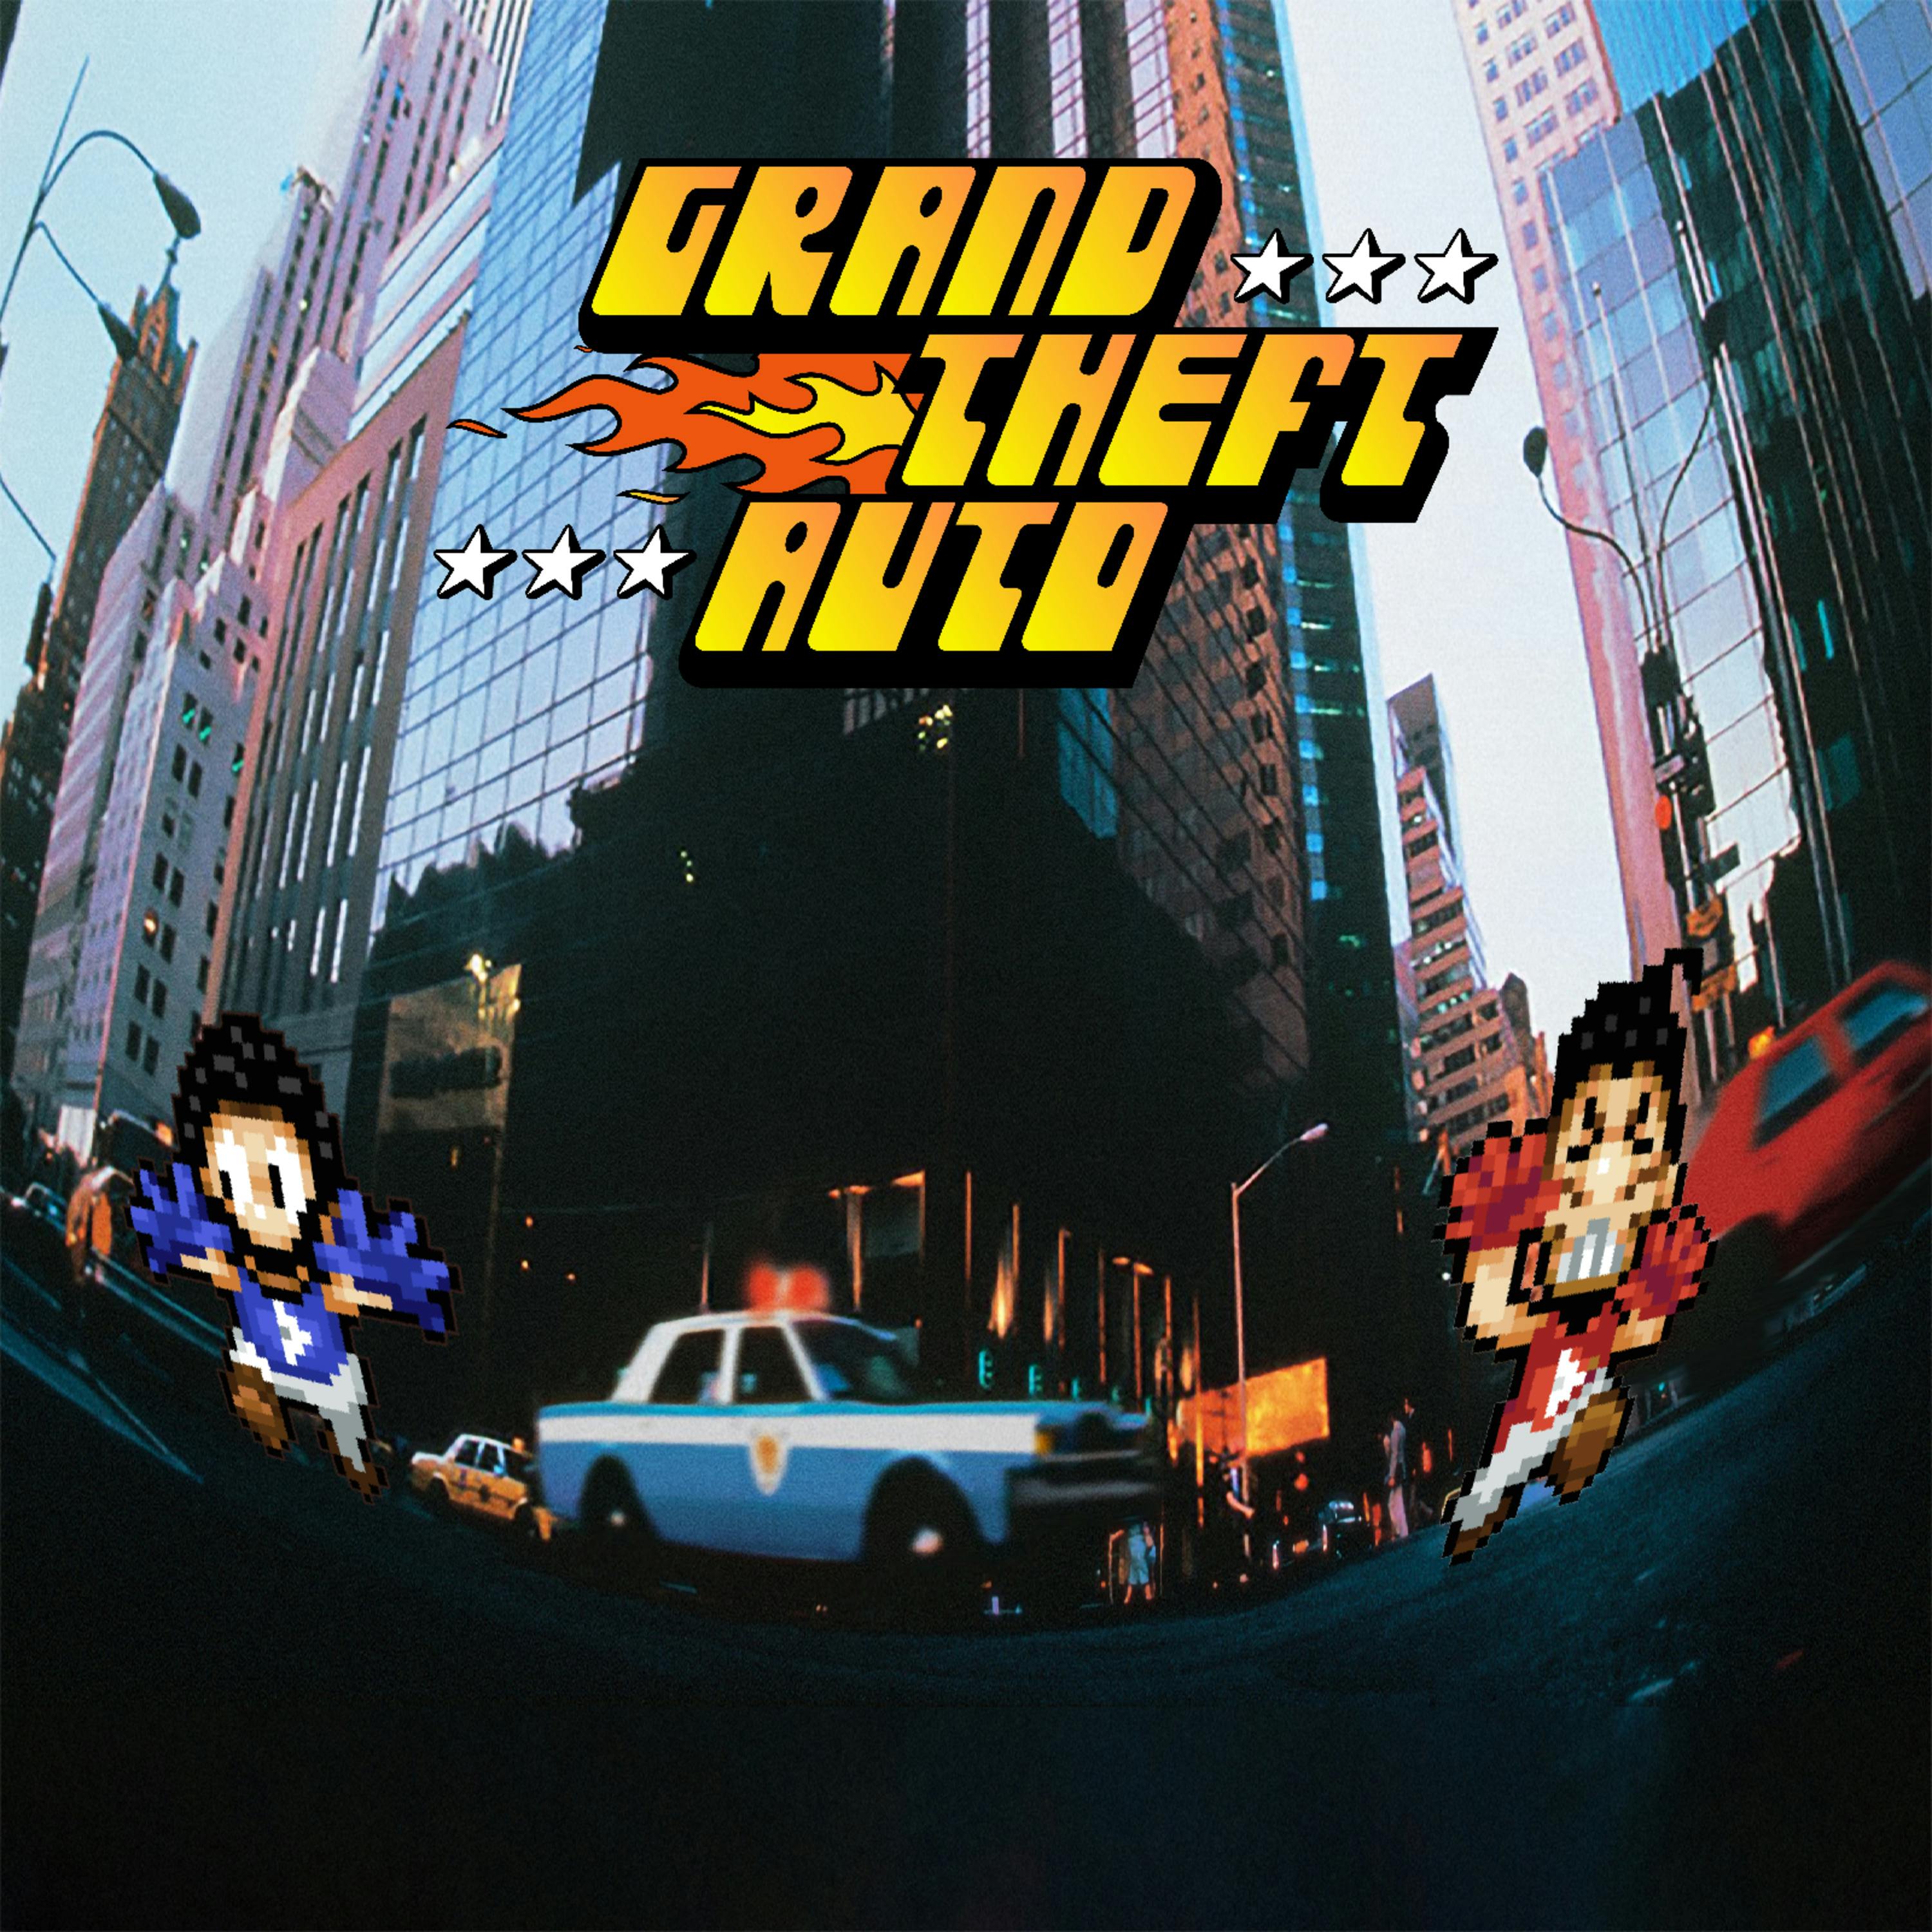 210 - Grand Theft Auto